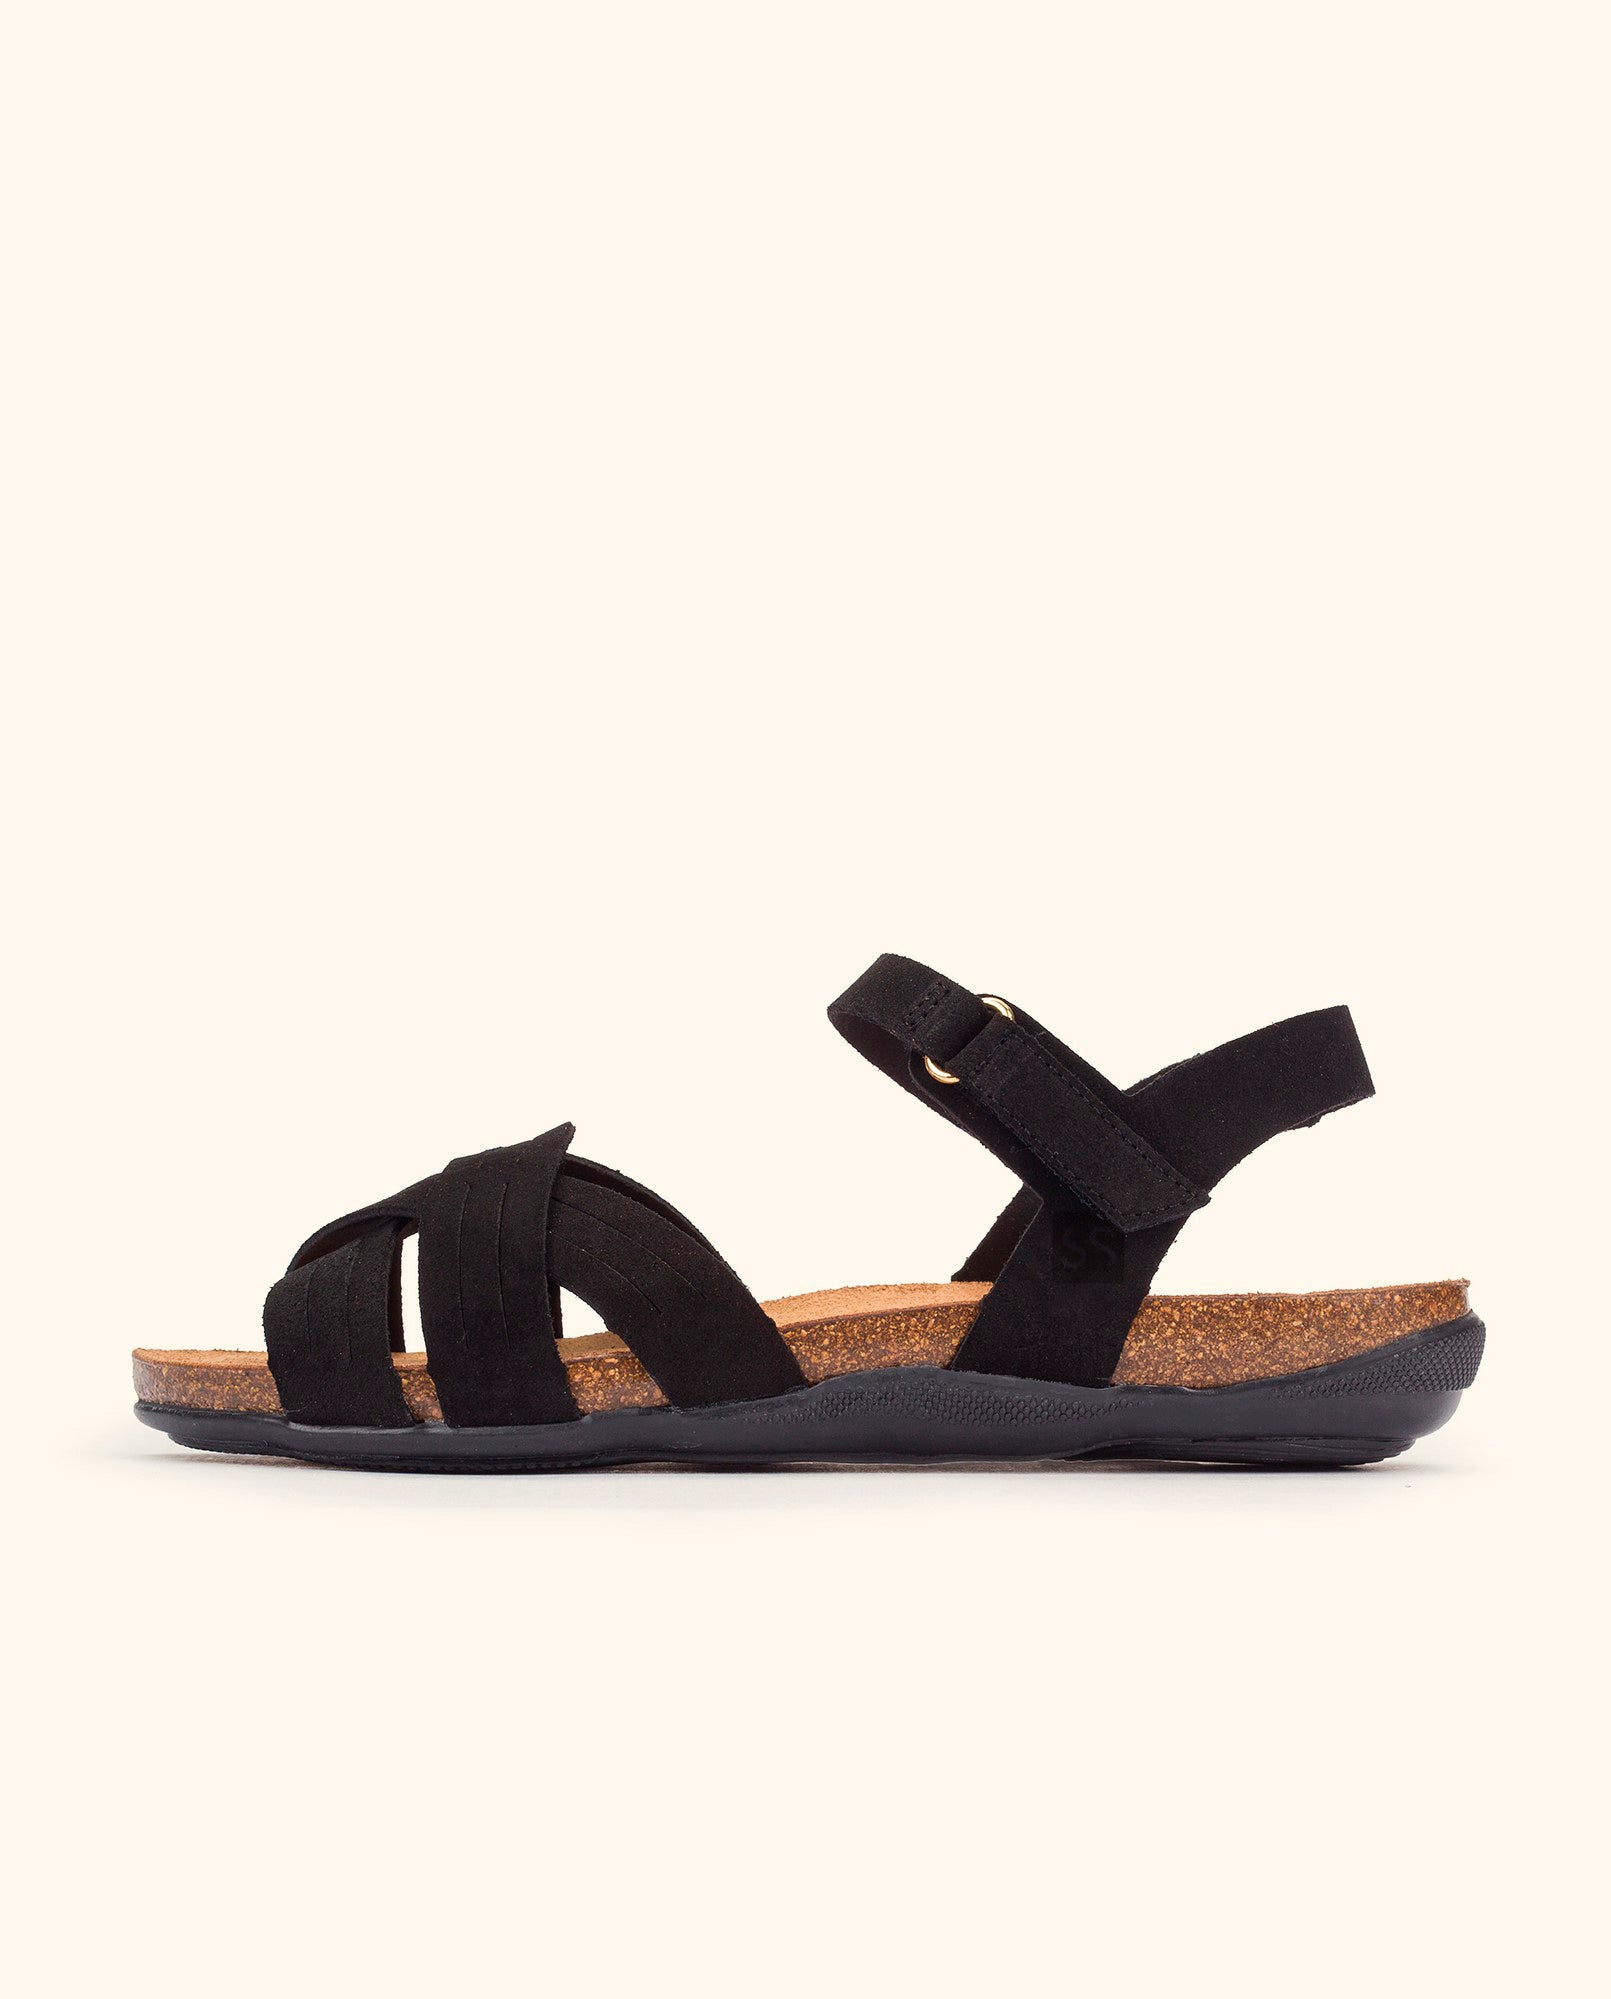 MANACOR-002 flat sandal black